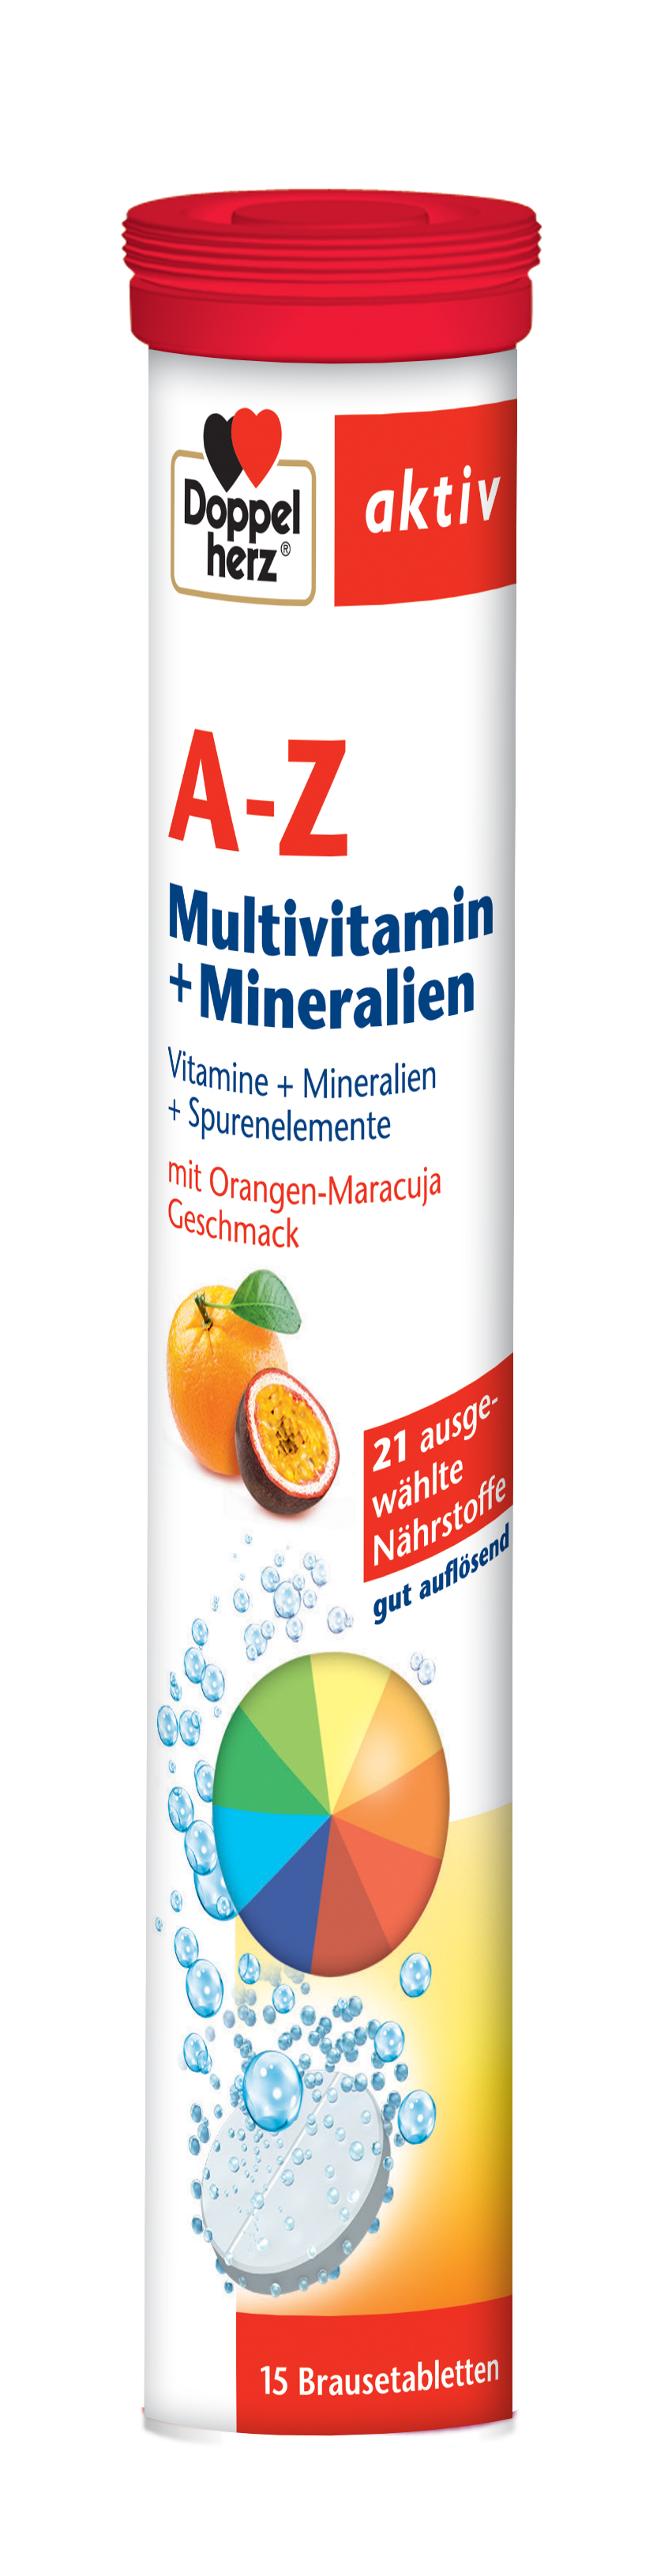 Uz general - Doppelherz Aktiv A-Z Vitamine + Minerale + Microelemente, 15 comprimate efervescente, sinapis.ro